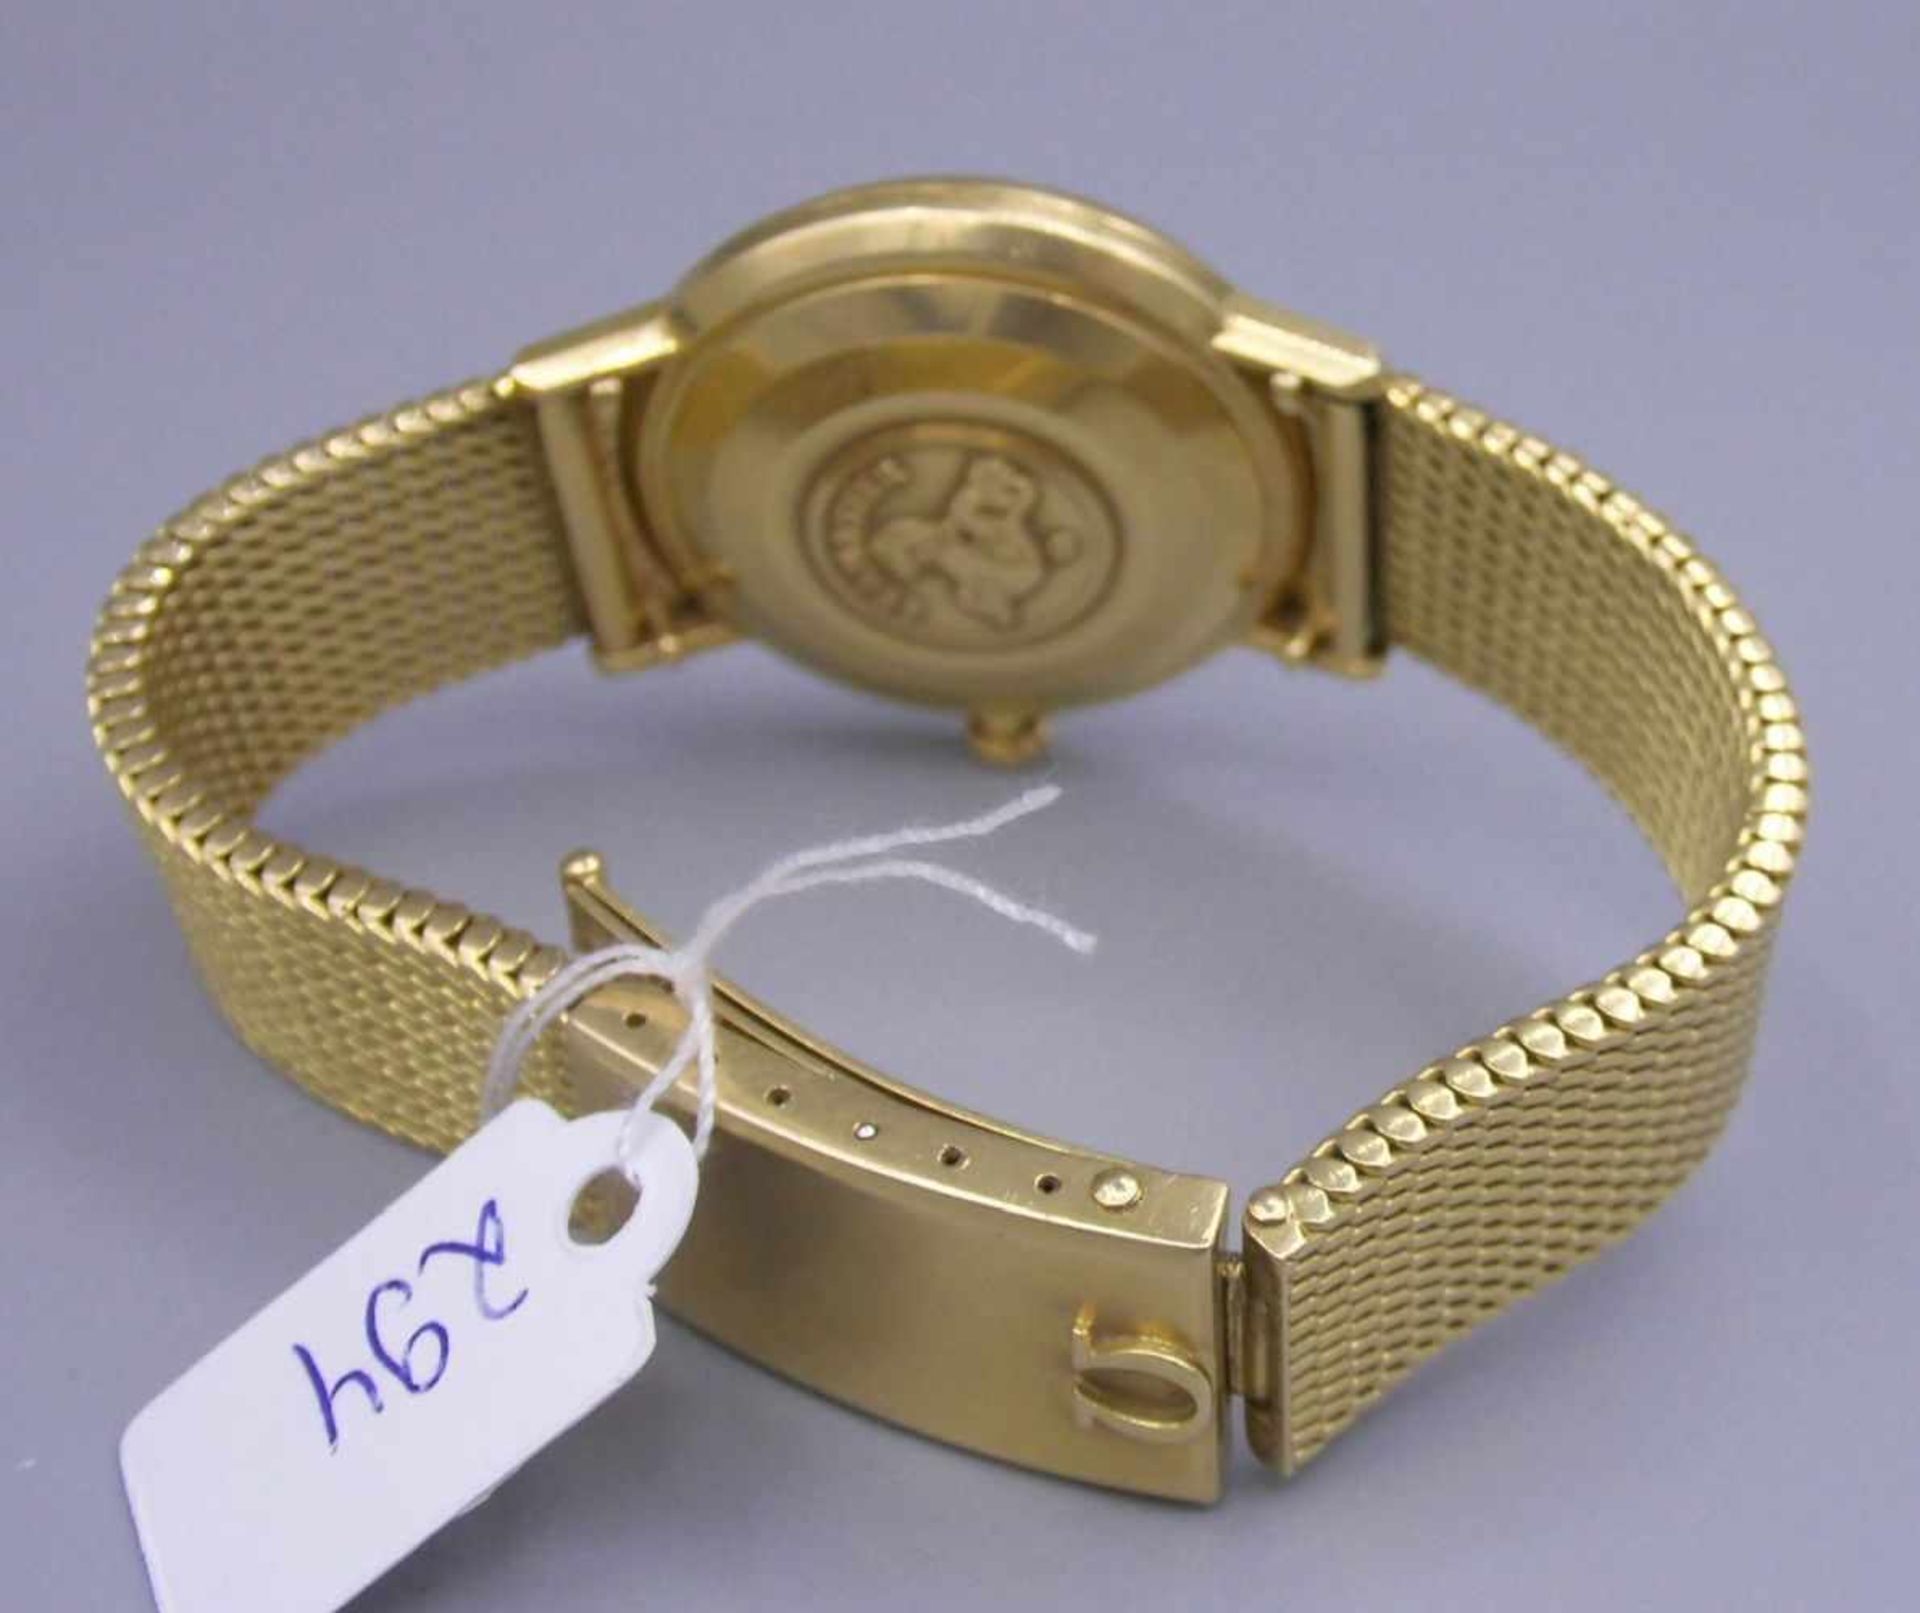 GOLDENE ARMBANDUHR / wristwatch, Automatik-Uhr, Manufaktur Omega, Modell "Seamaster De Ville". - Image 4 of 7